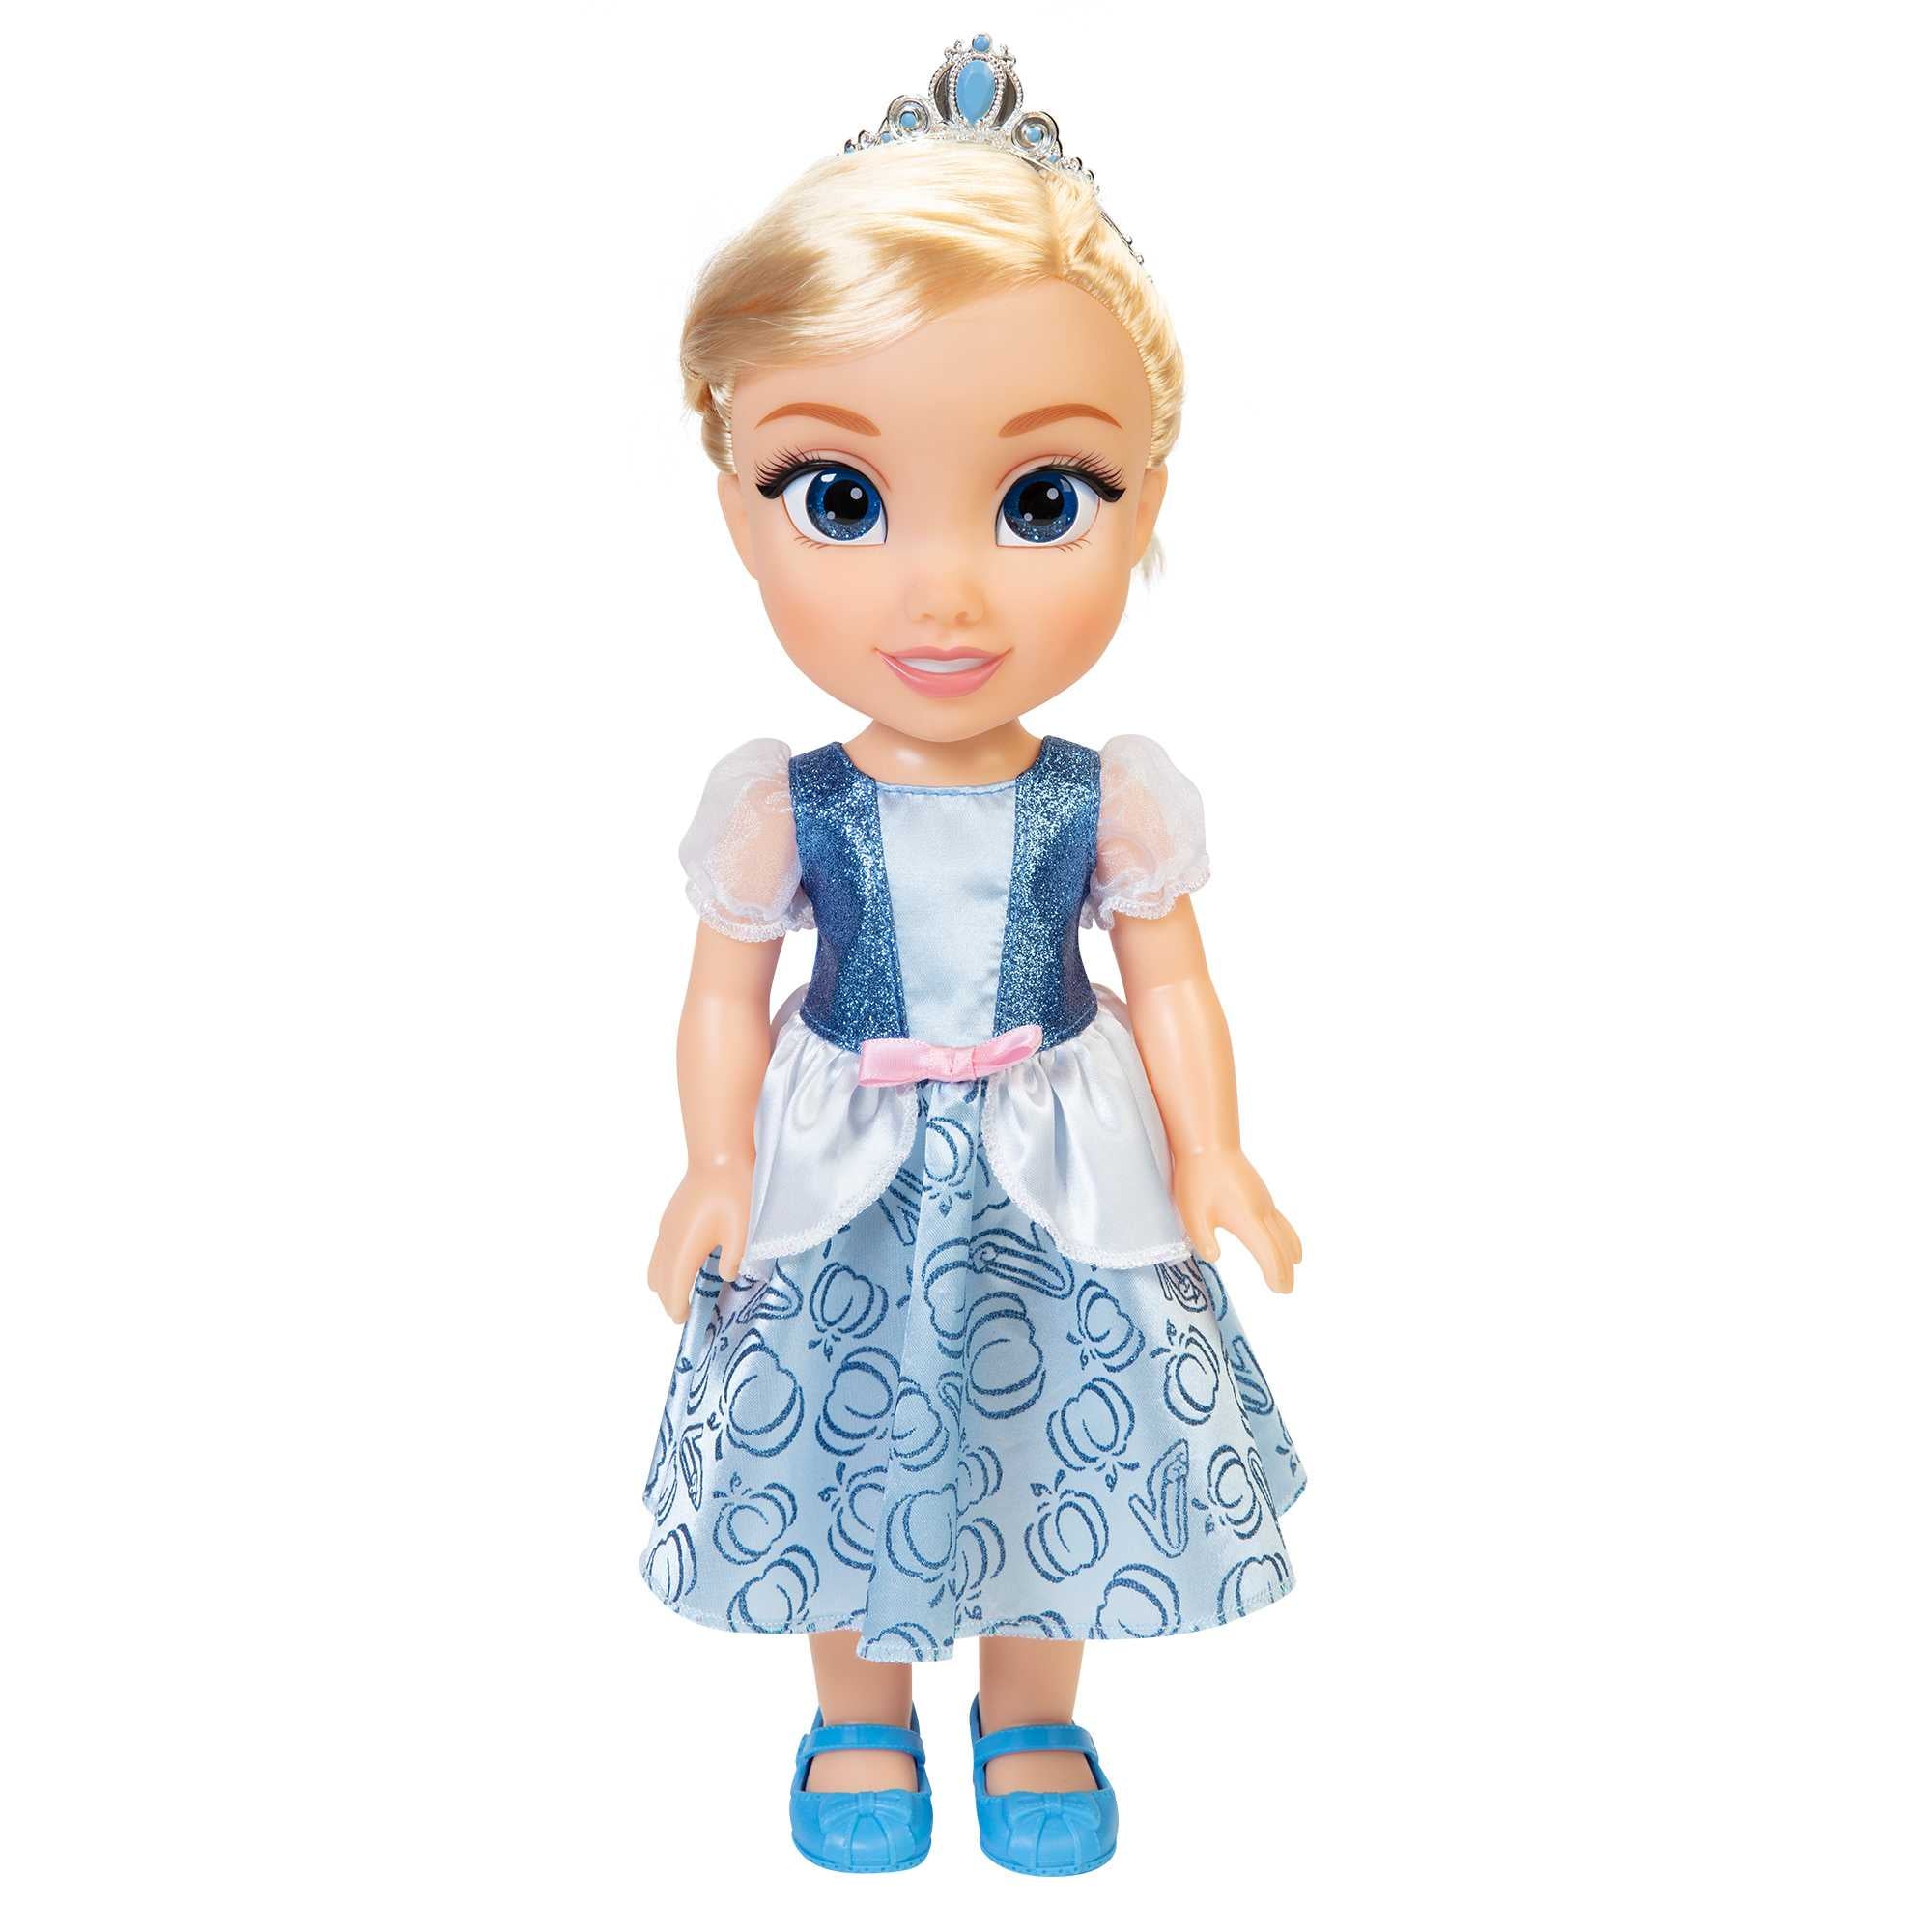 Photos - Role Playing Toy Disney Princess My Friend Cinderella Doll 